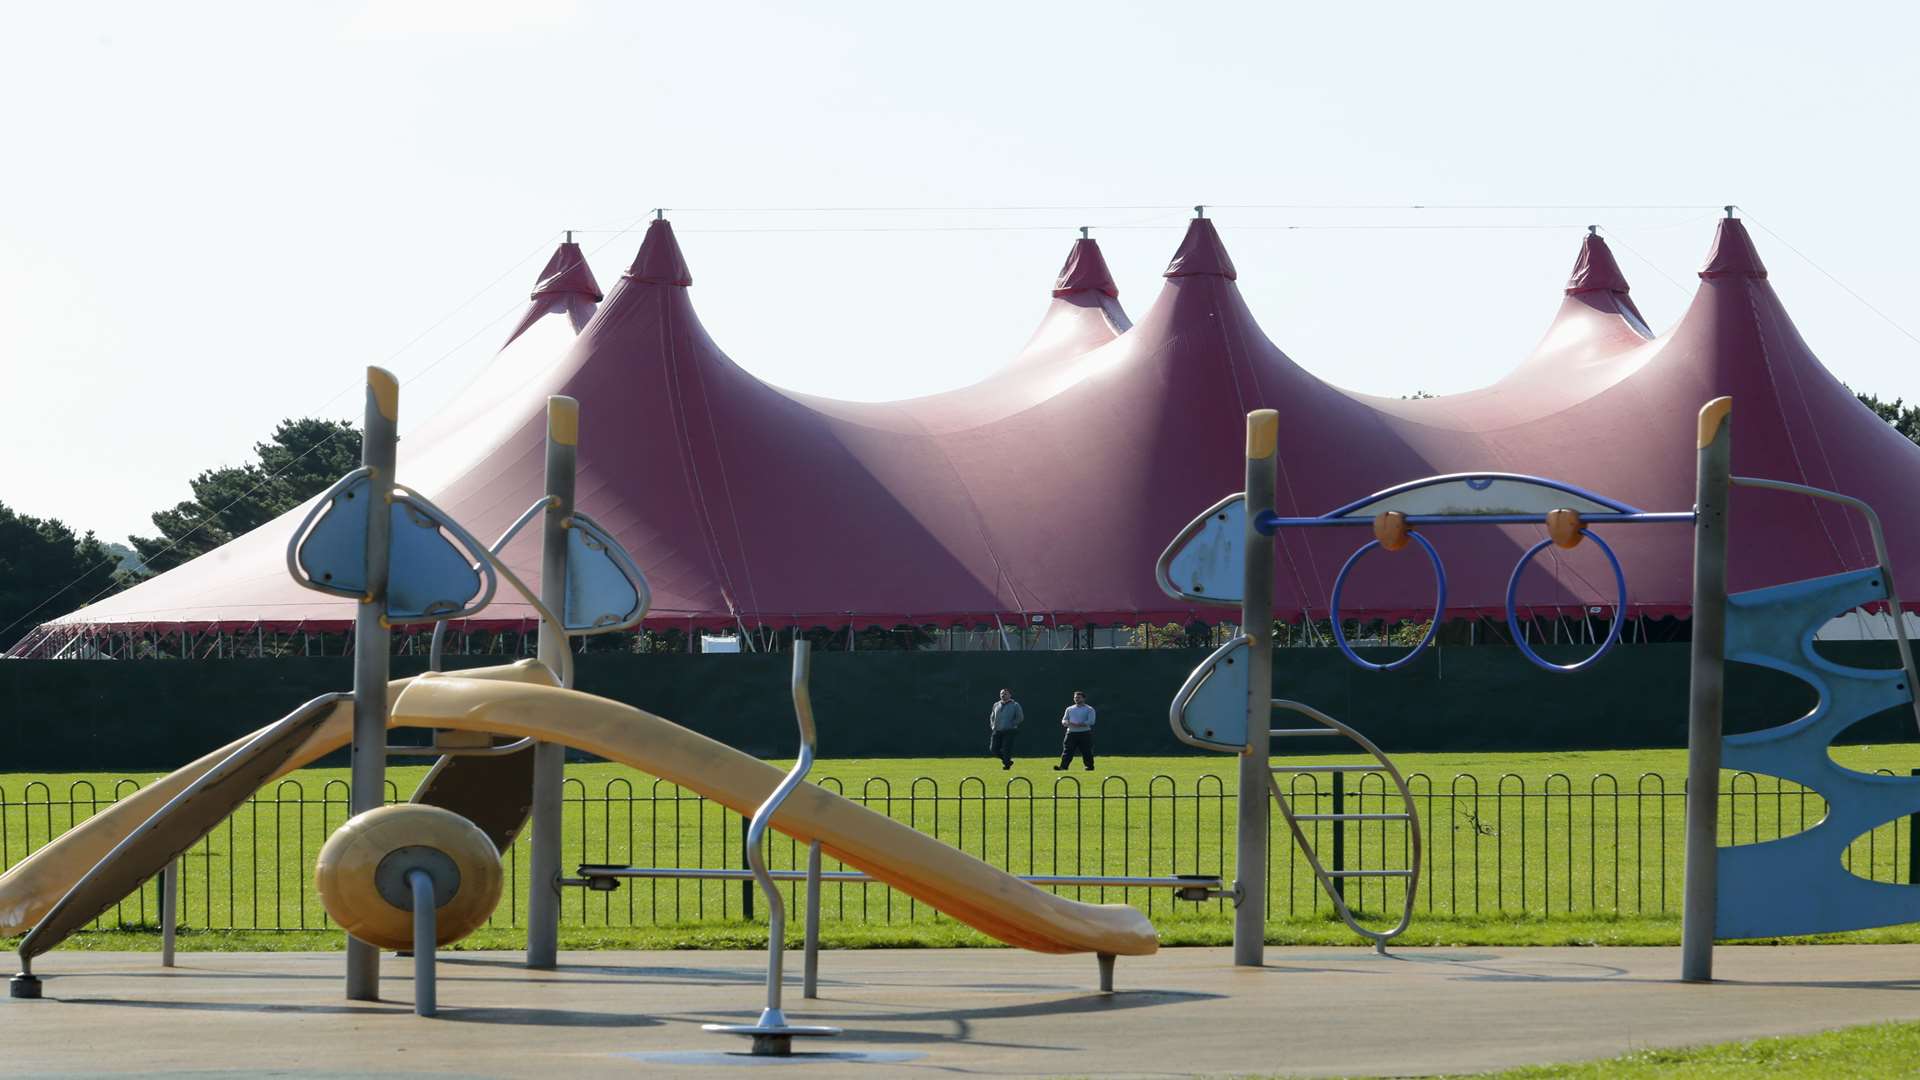 The Social festival was held at Mote Park in September